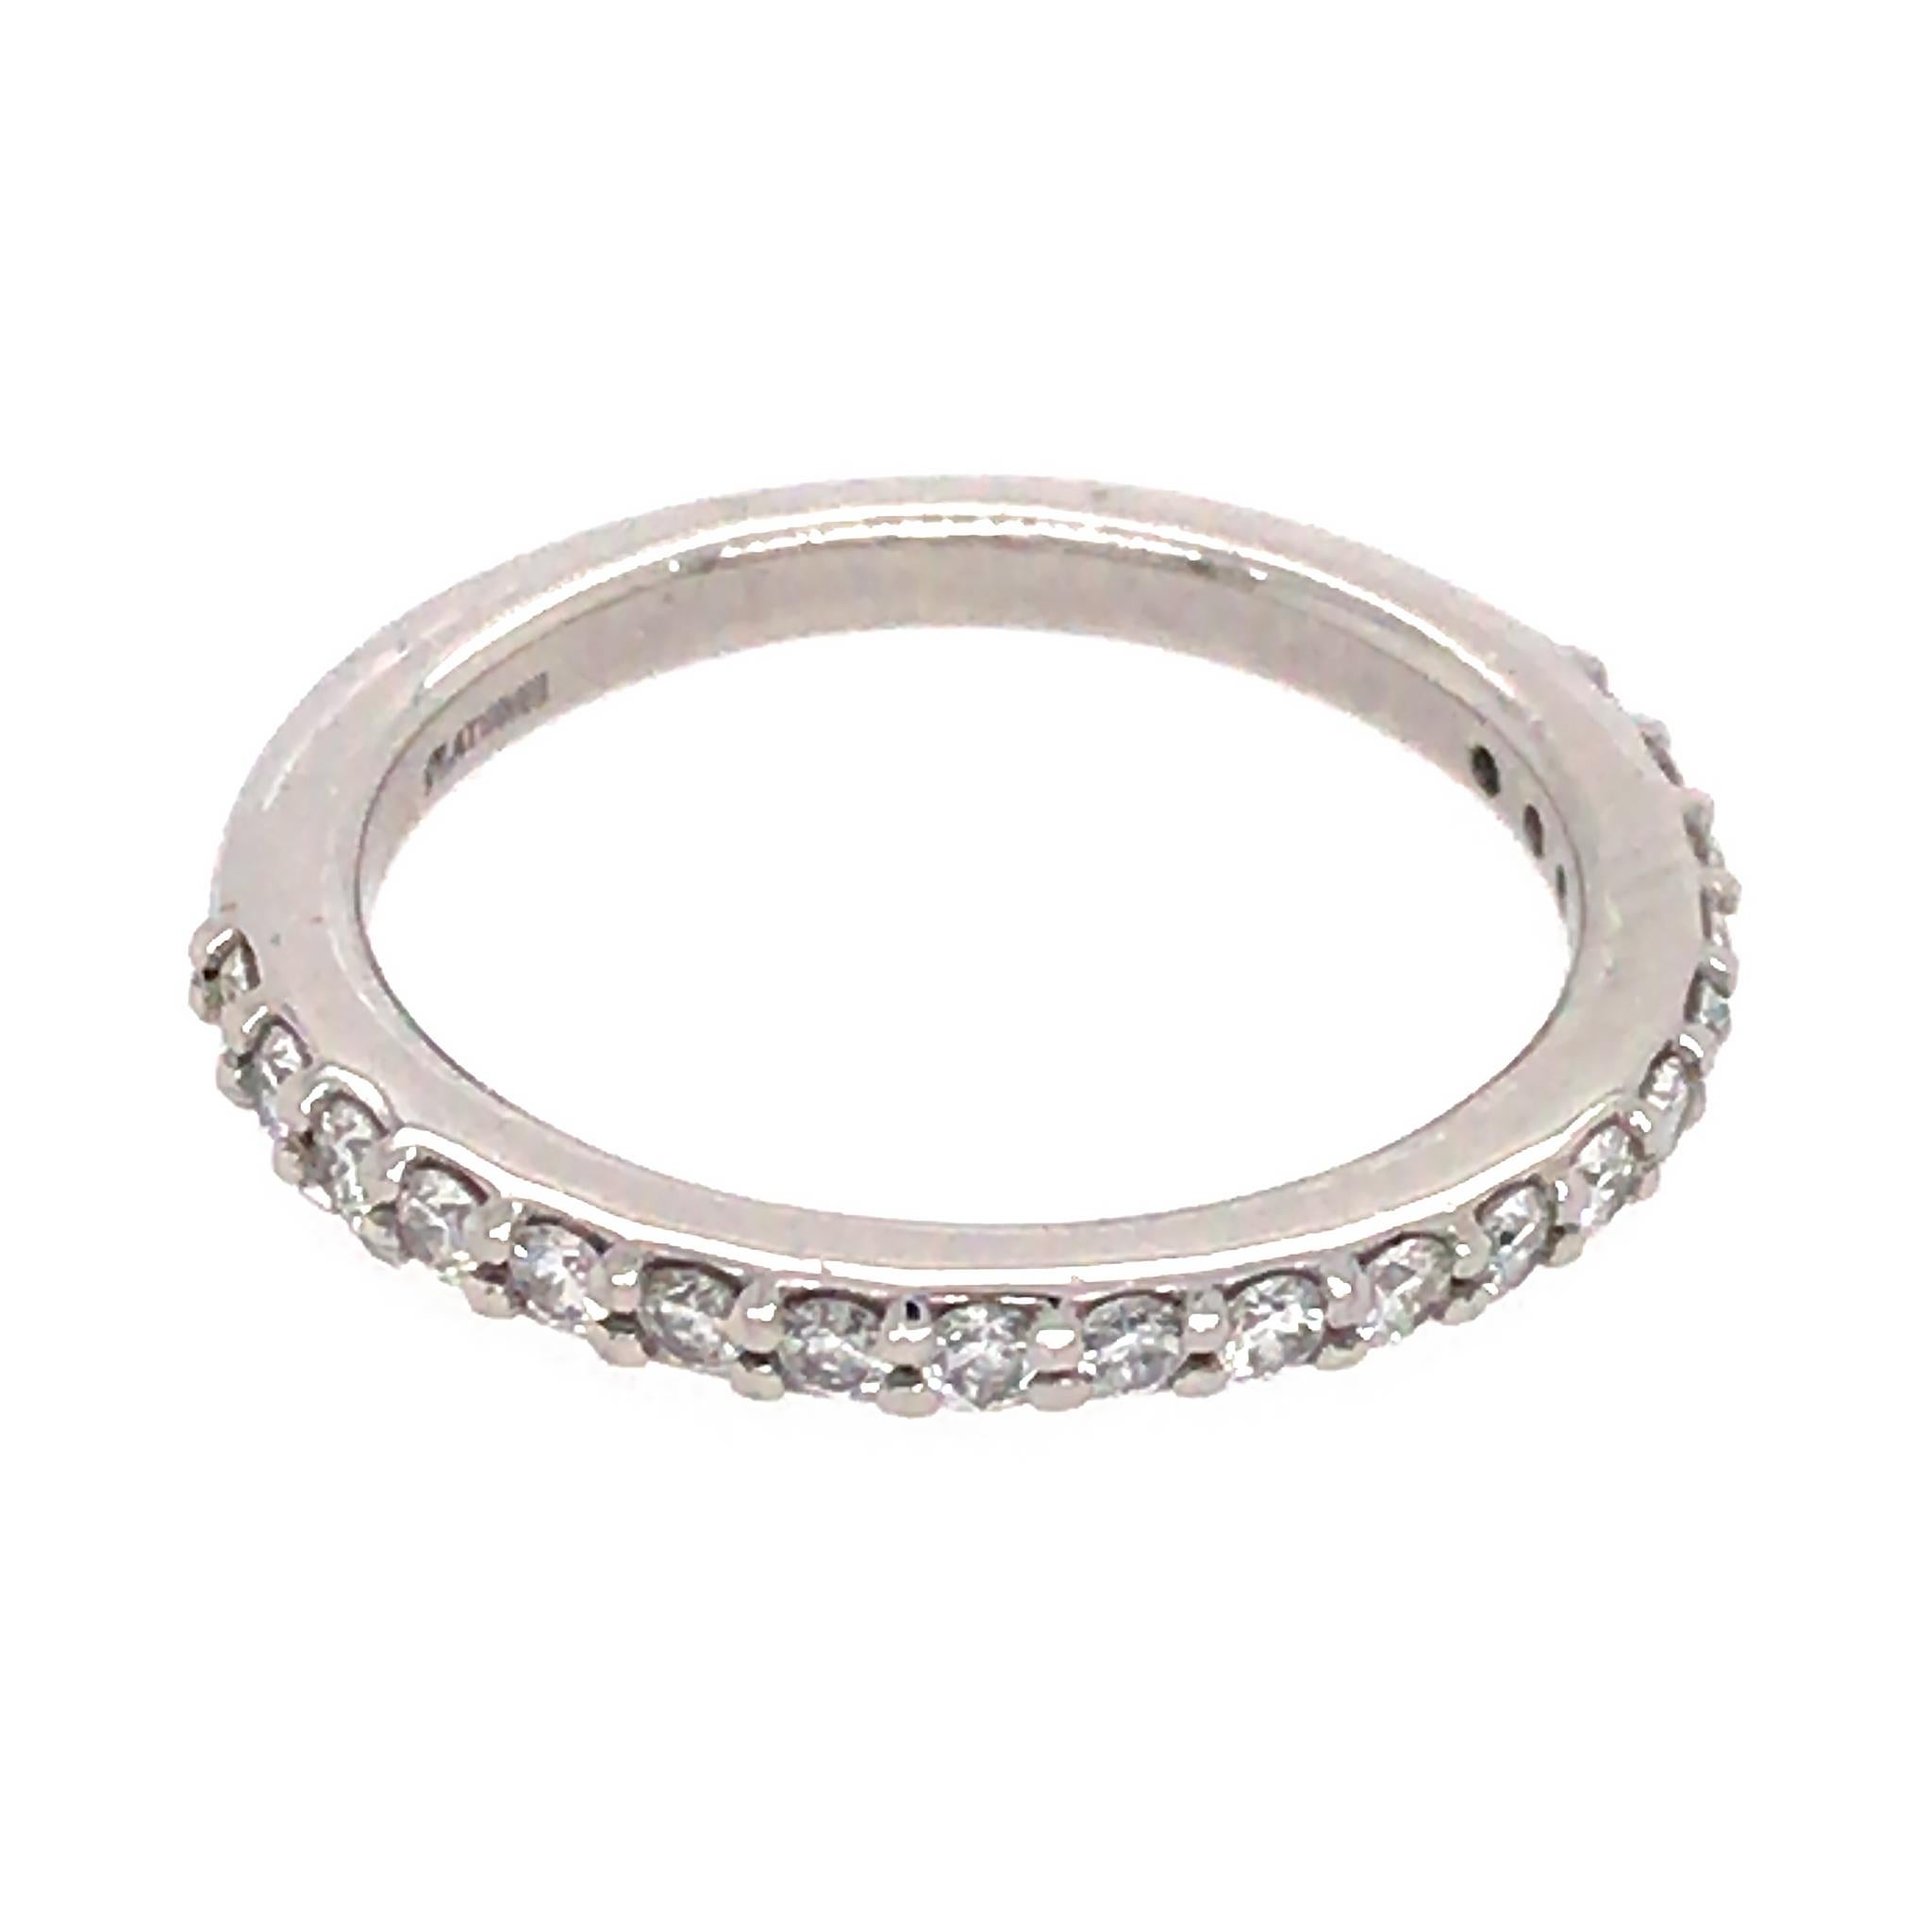 Platinum
Diamond: 0.30 ct twd
Ring Size: 4